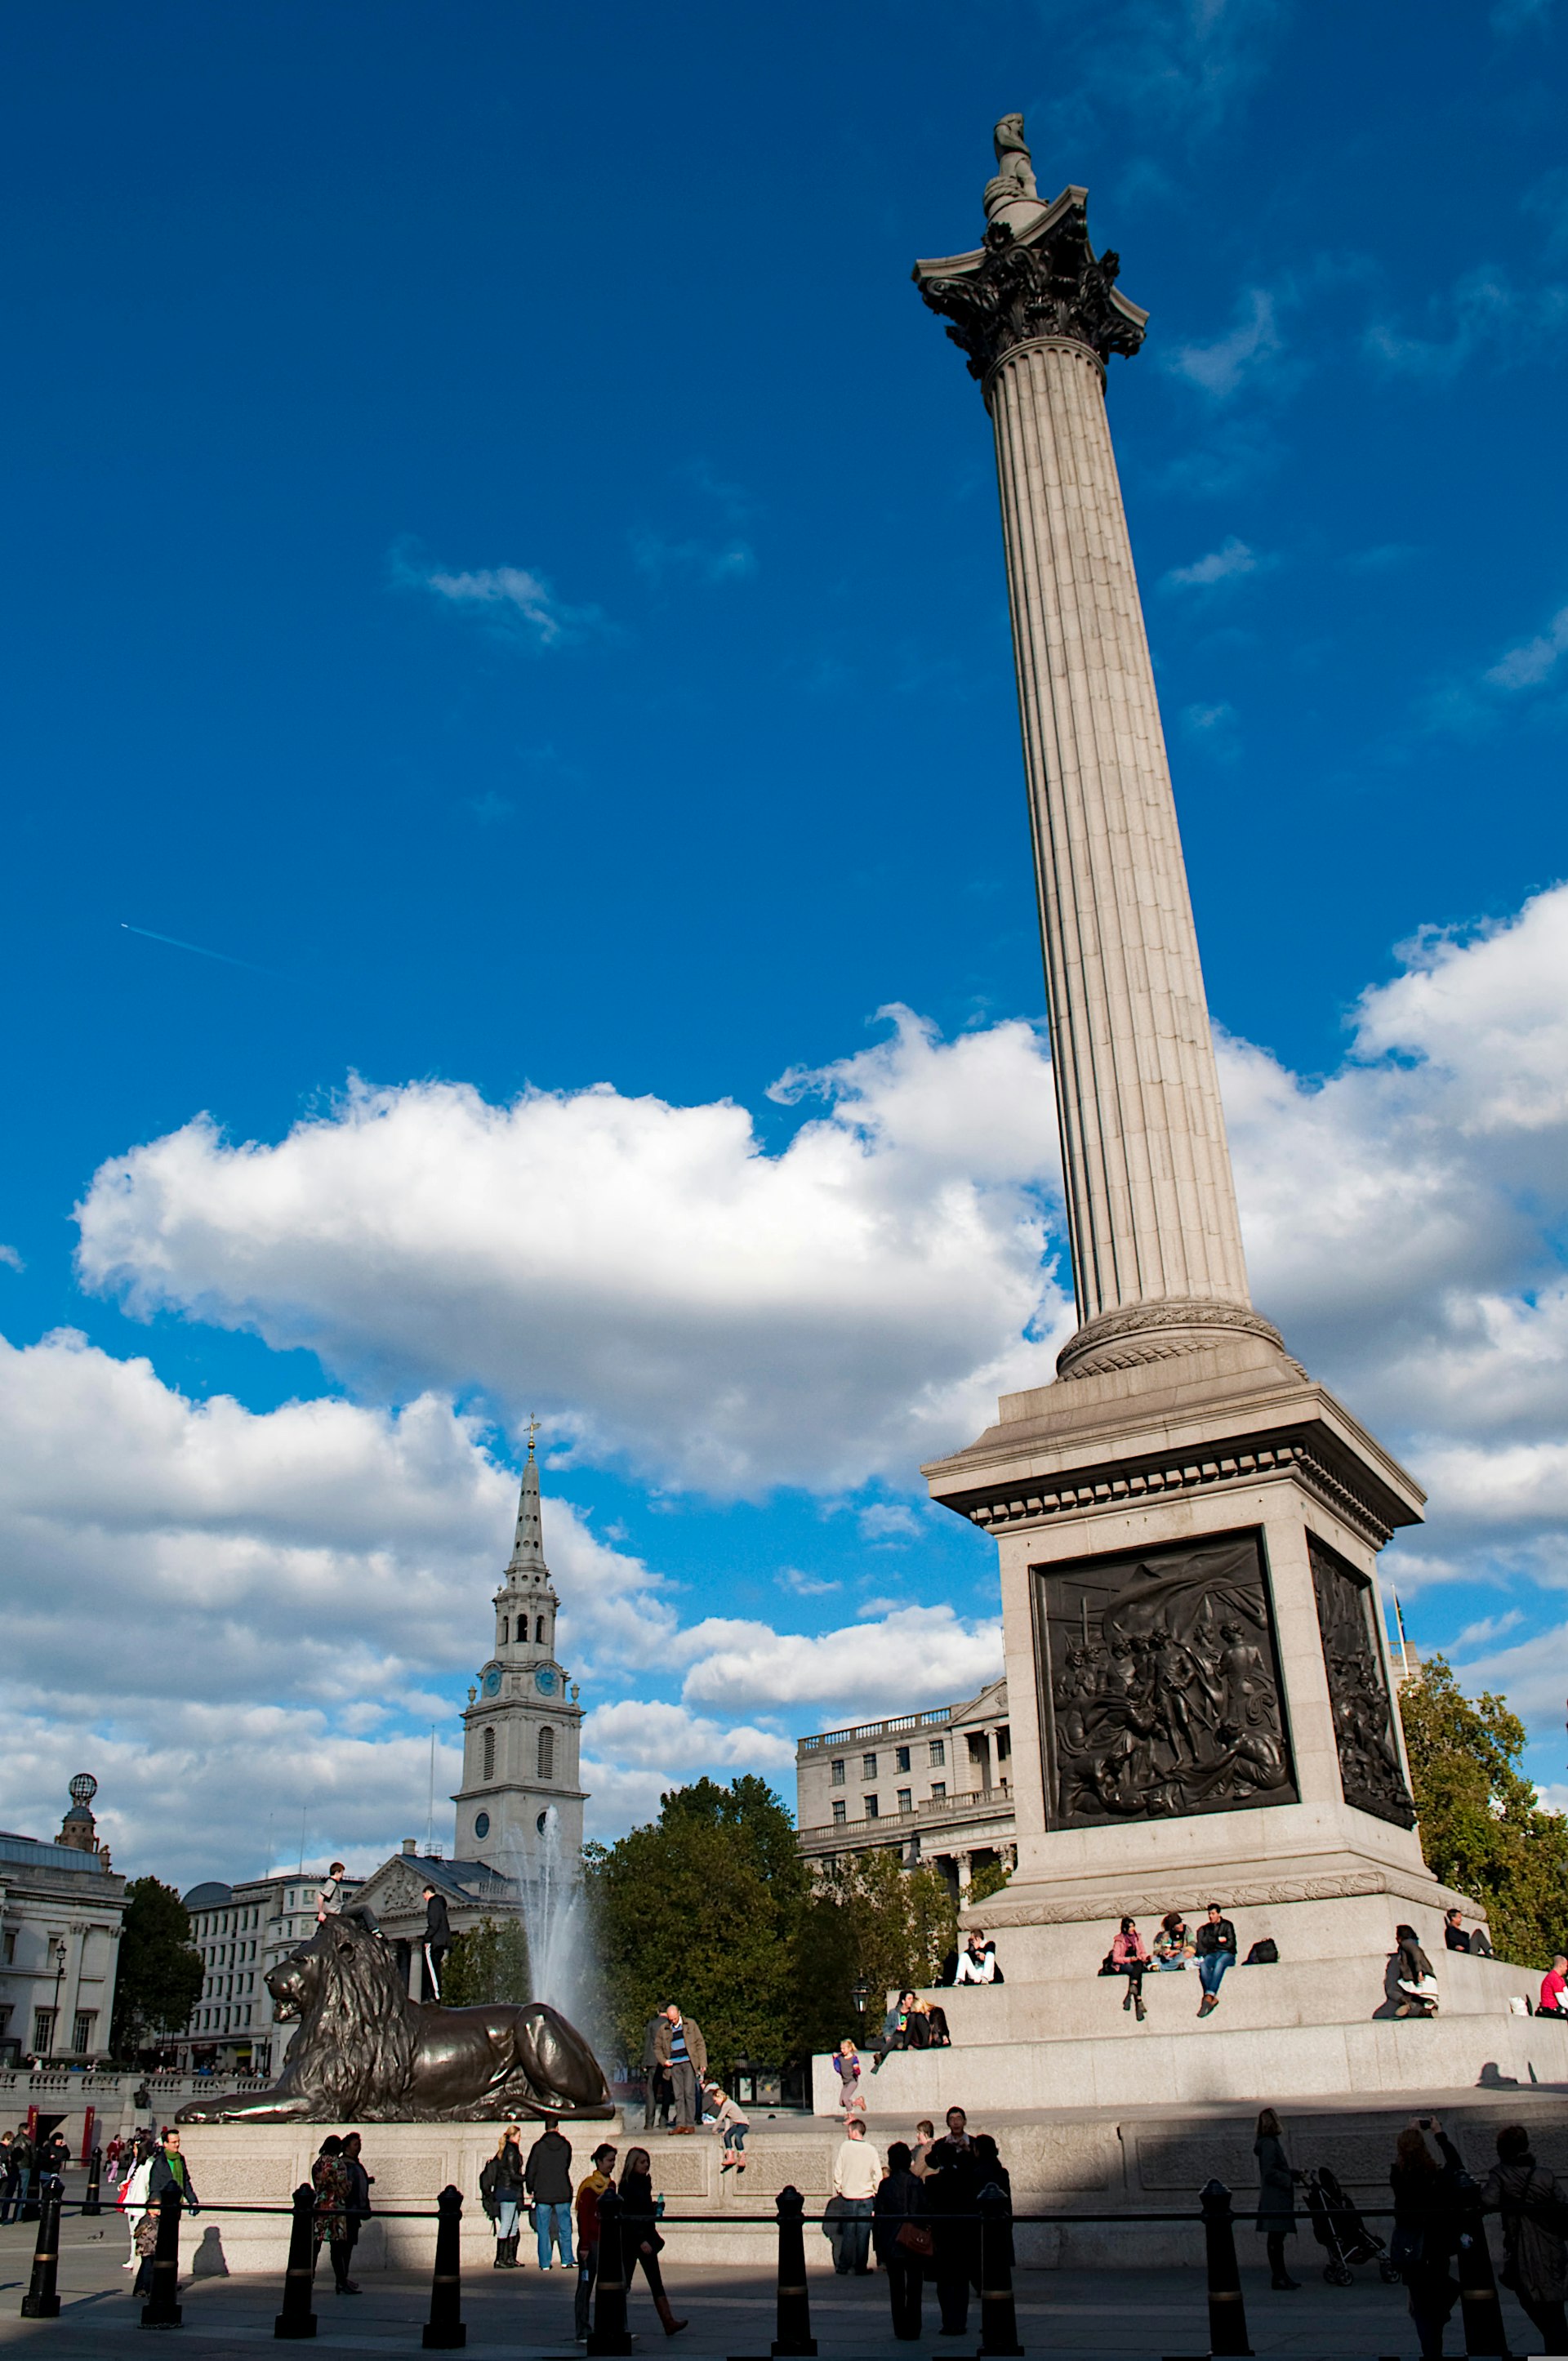 Nelson's Column rises above Trafalgar Square in central London.